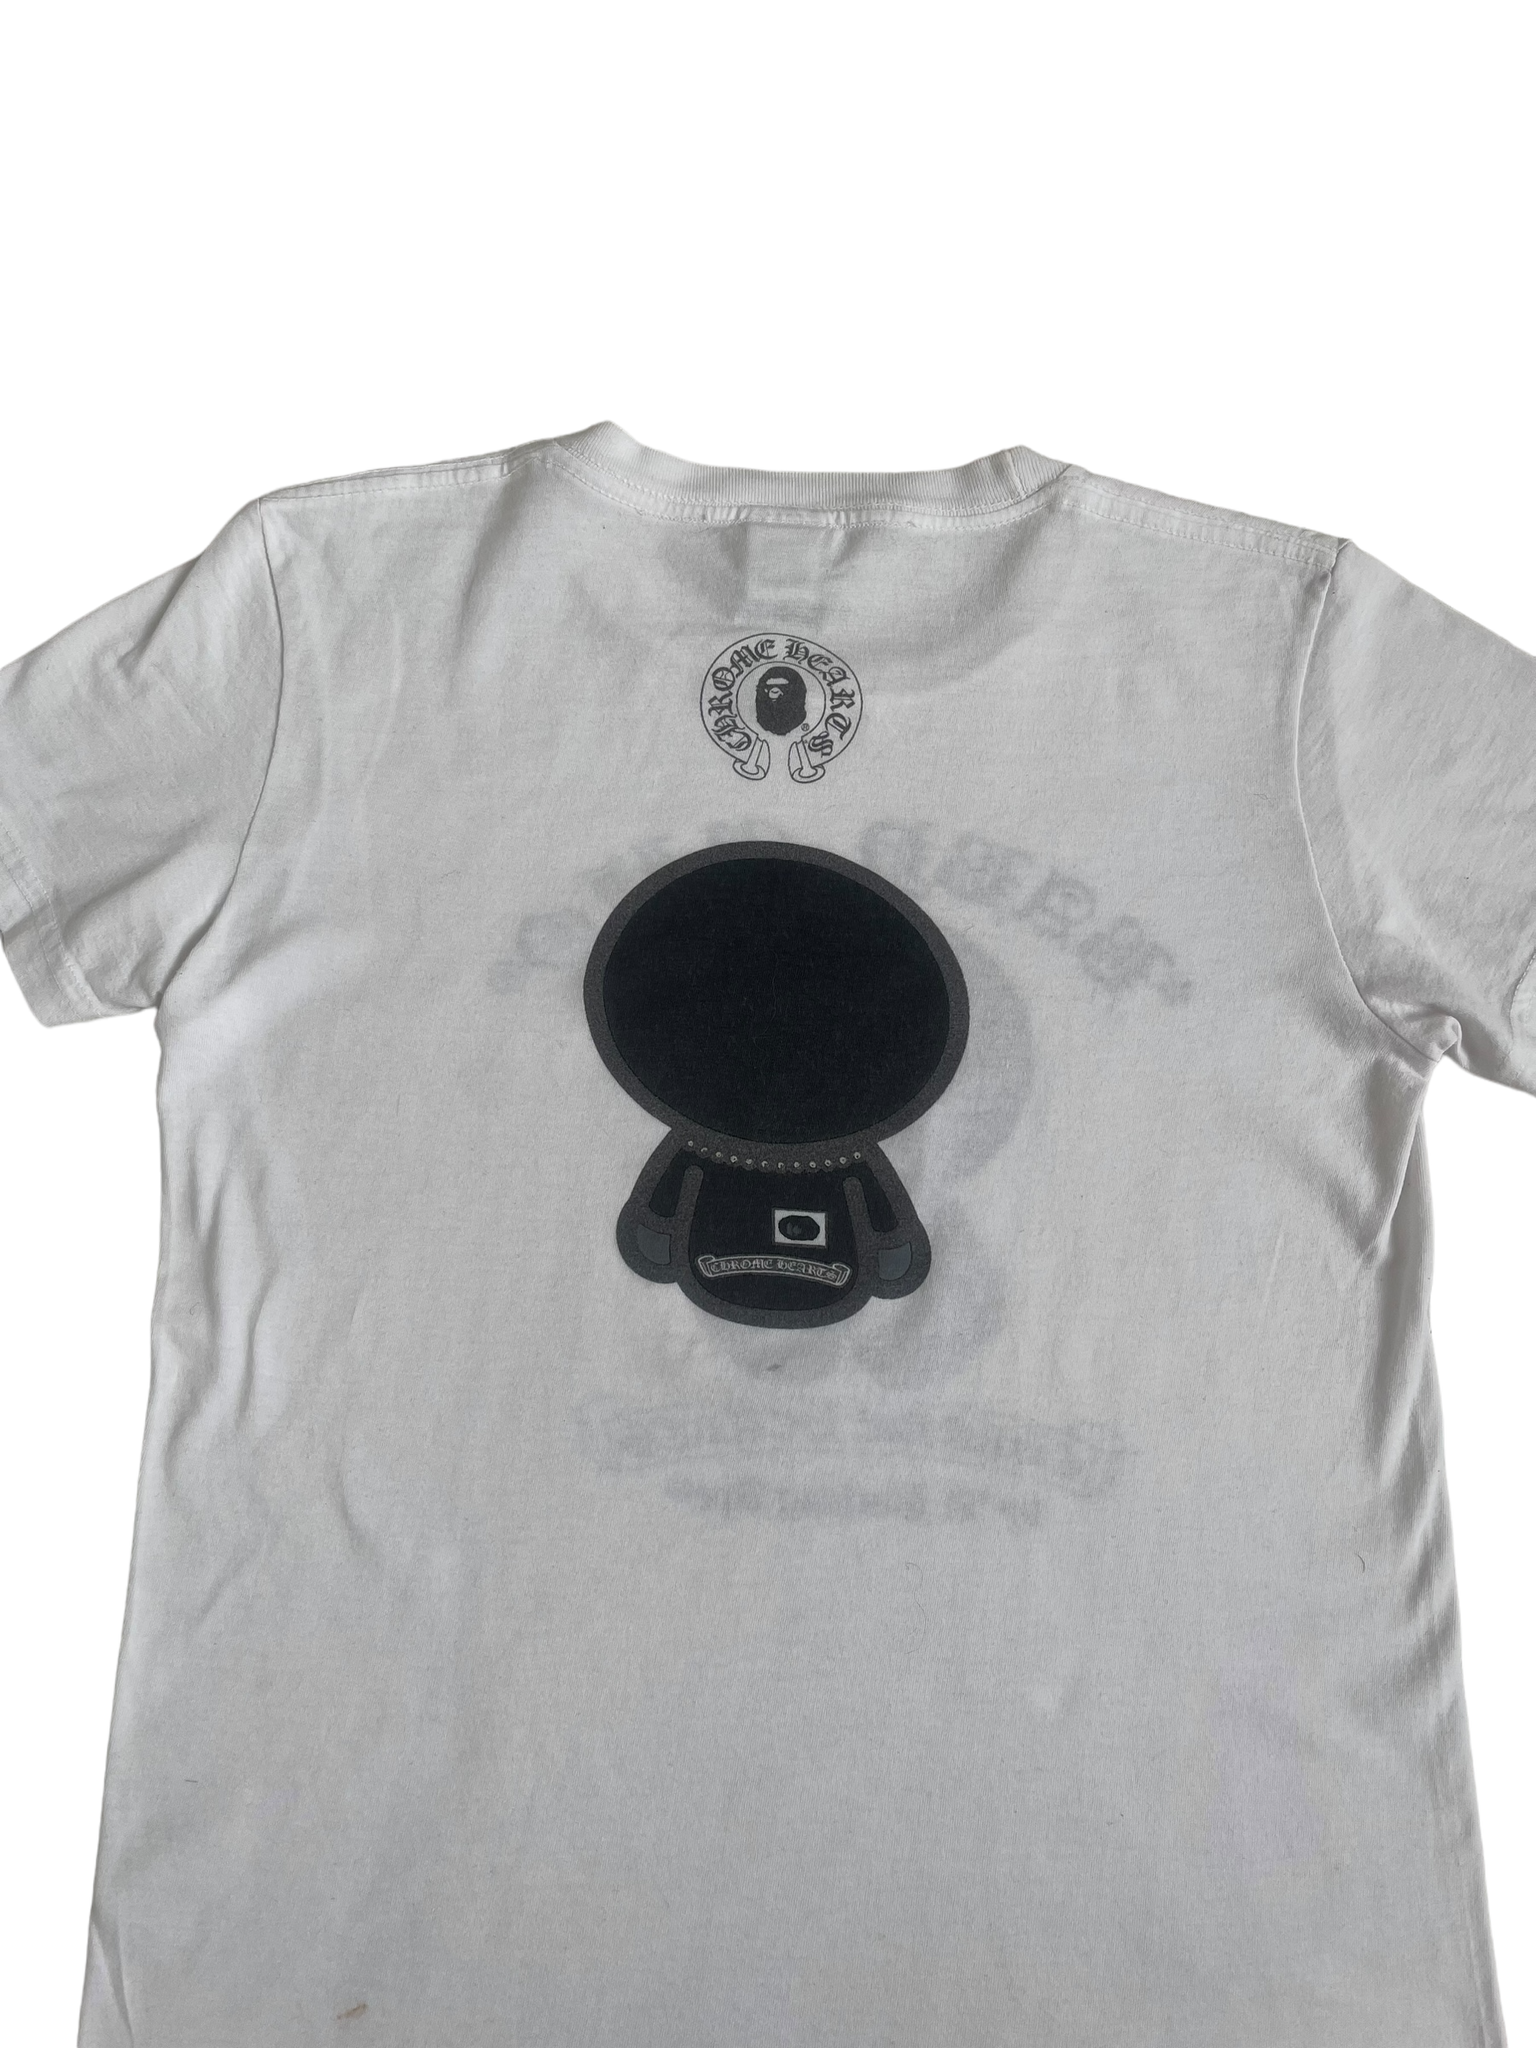 Chrome Hearts X Baby Milo T-shirt (S)